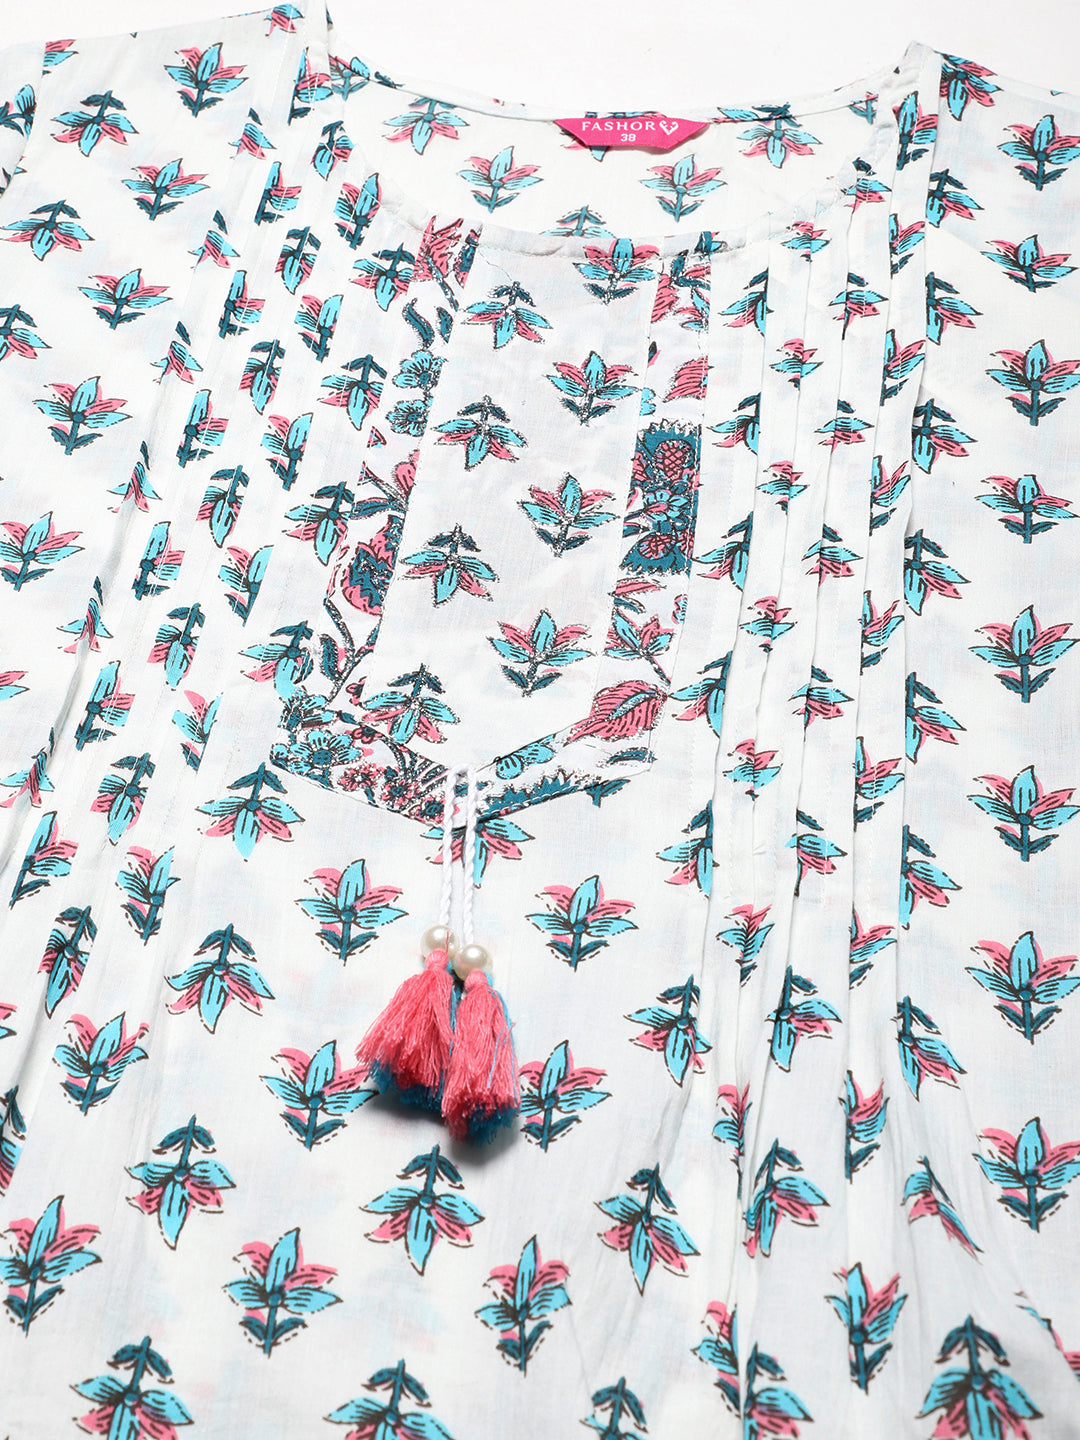 Floral Printed Zari Embroidered Tasseled Pin-Tucks Kurta With Pants - White & Teal Blue